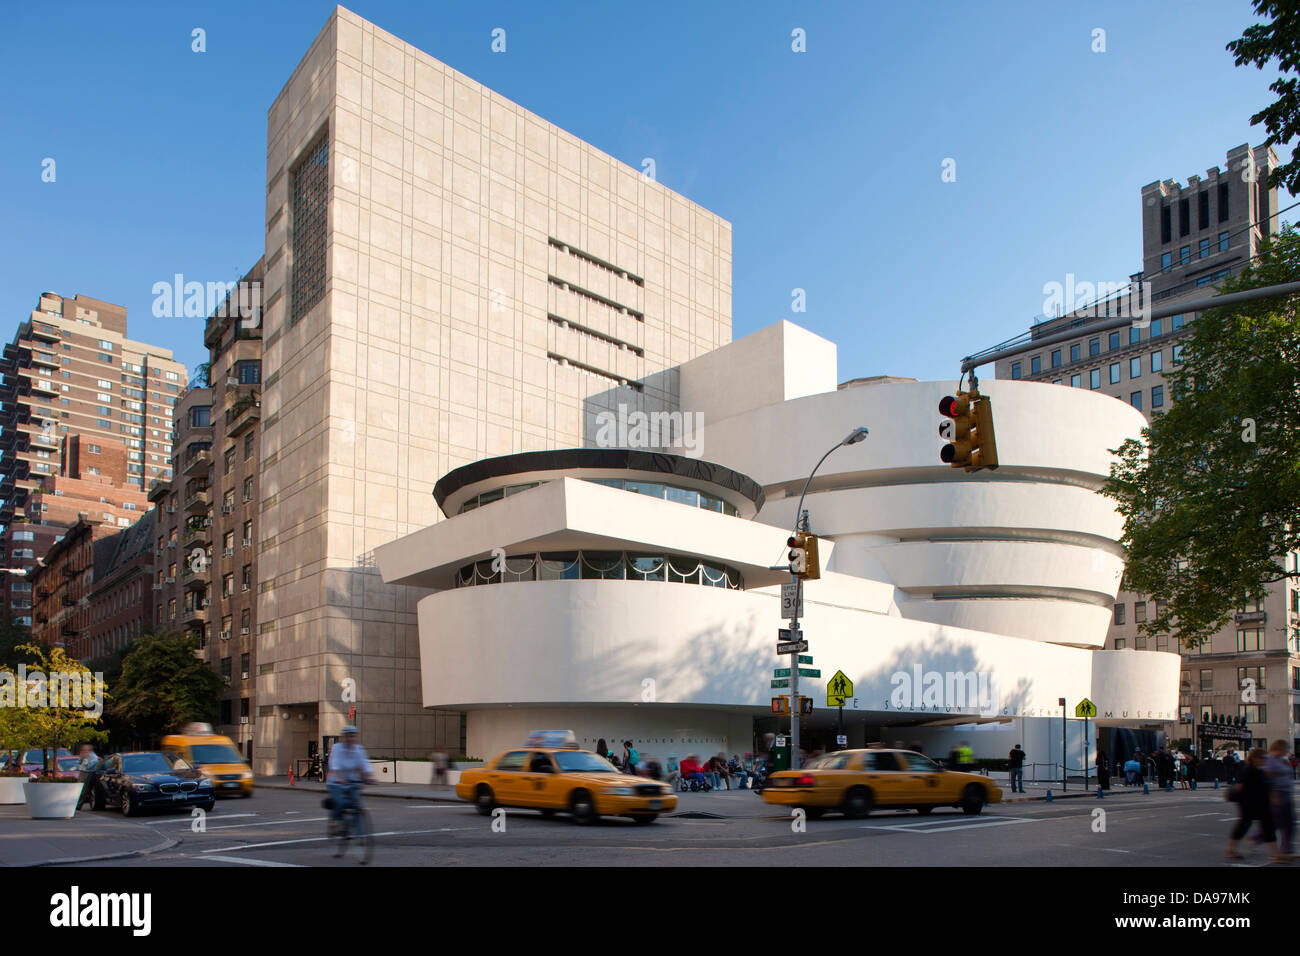 SOLOMON GUGGENHEIM MUSEUM (© FRANK LLOYD WRIGHT 1959 / GWATHMAY SIEGEL ASSOCS 1992) FIFTH AVENUE IN MANHATTAN NEW YORK CITY USA Stockfoto